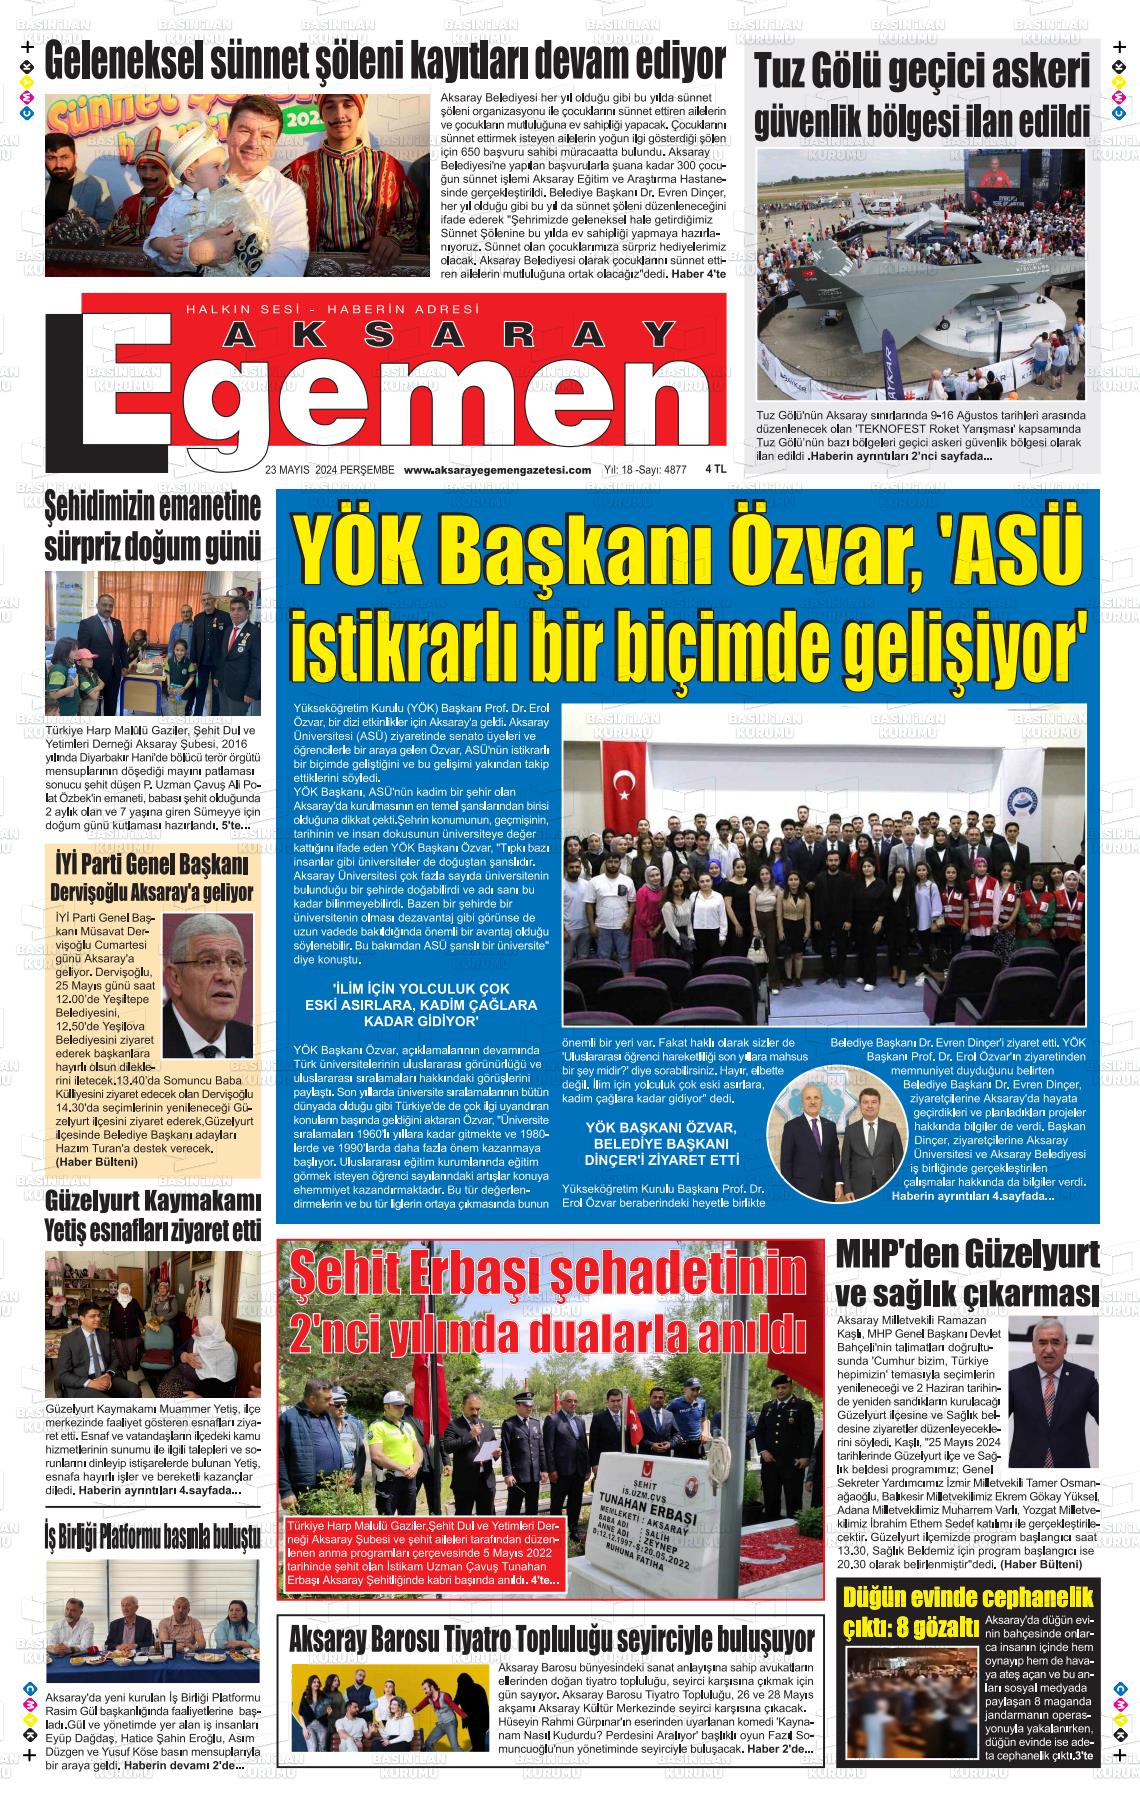 AKSARAY EGEMEN Gazetesi